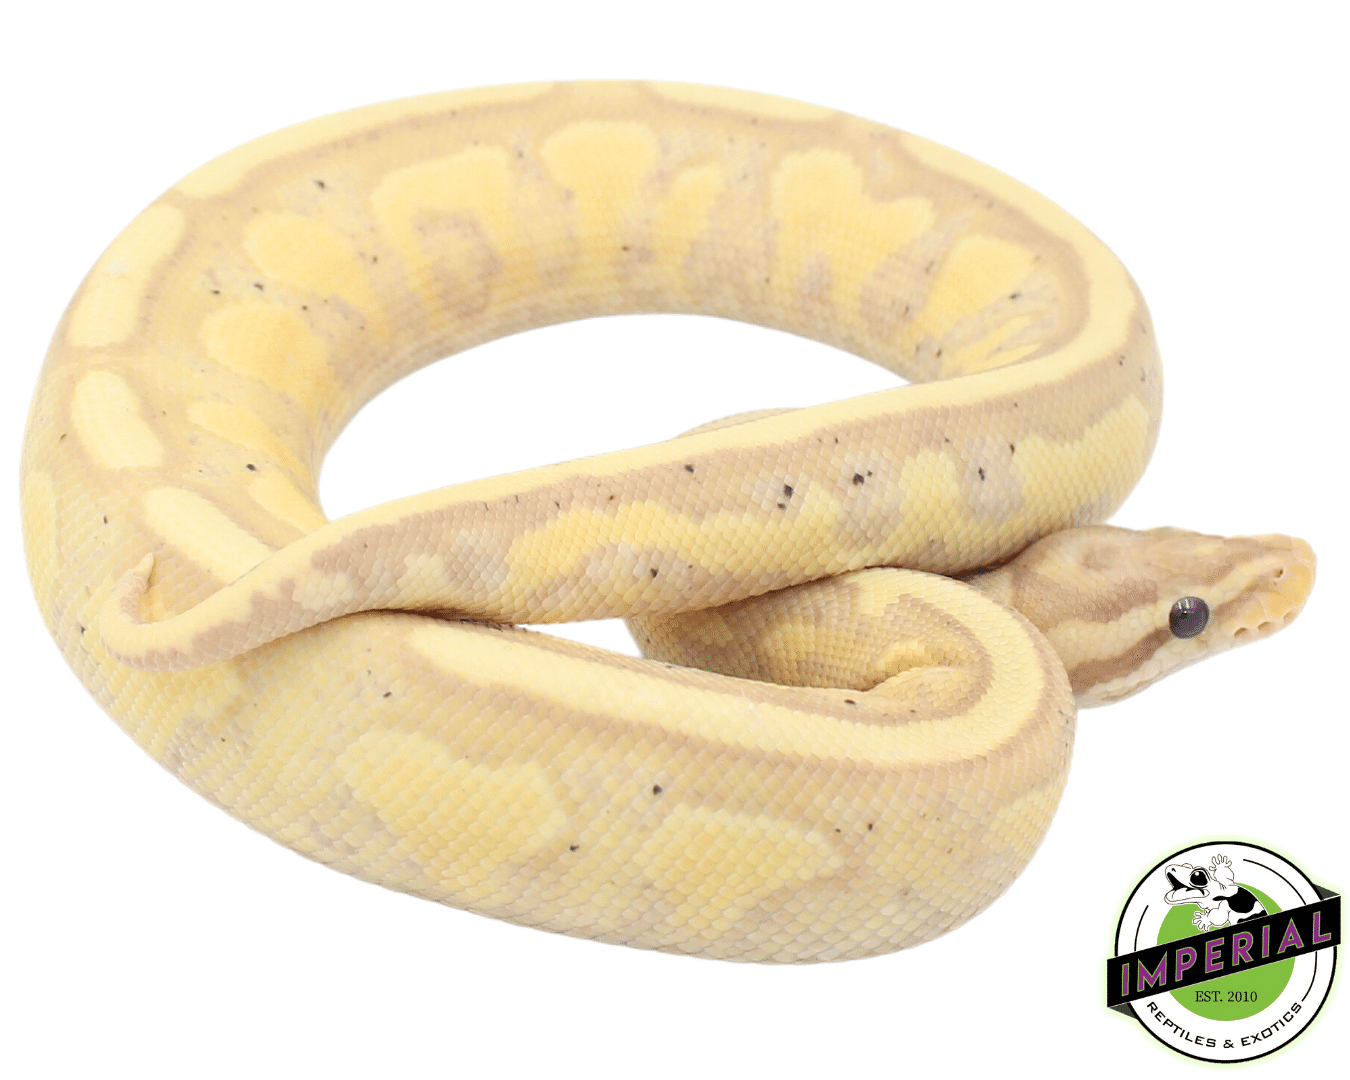 banana ball python for sale, buy reptiles online